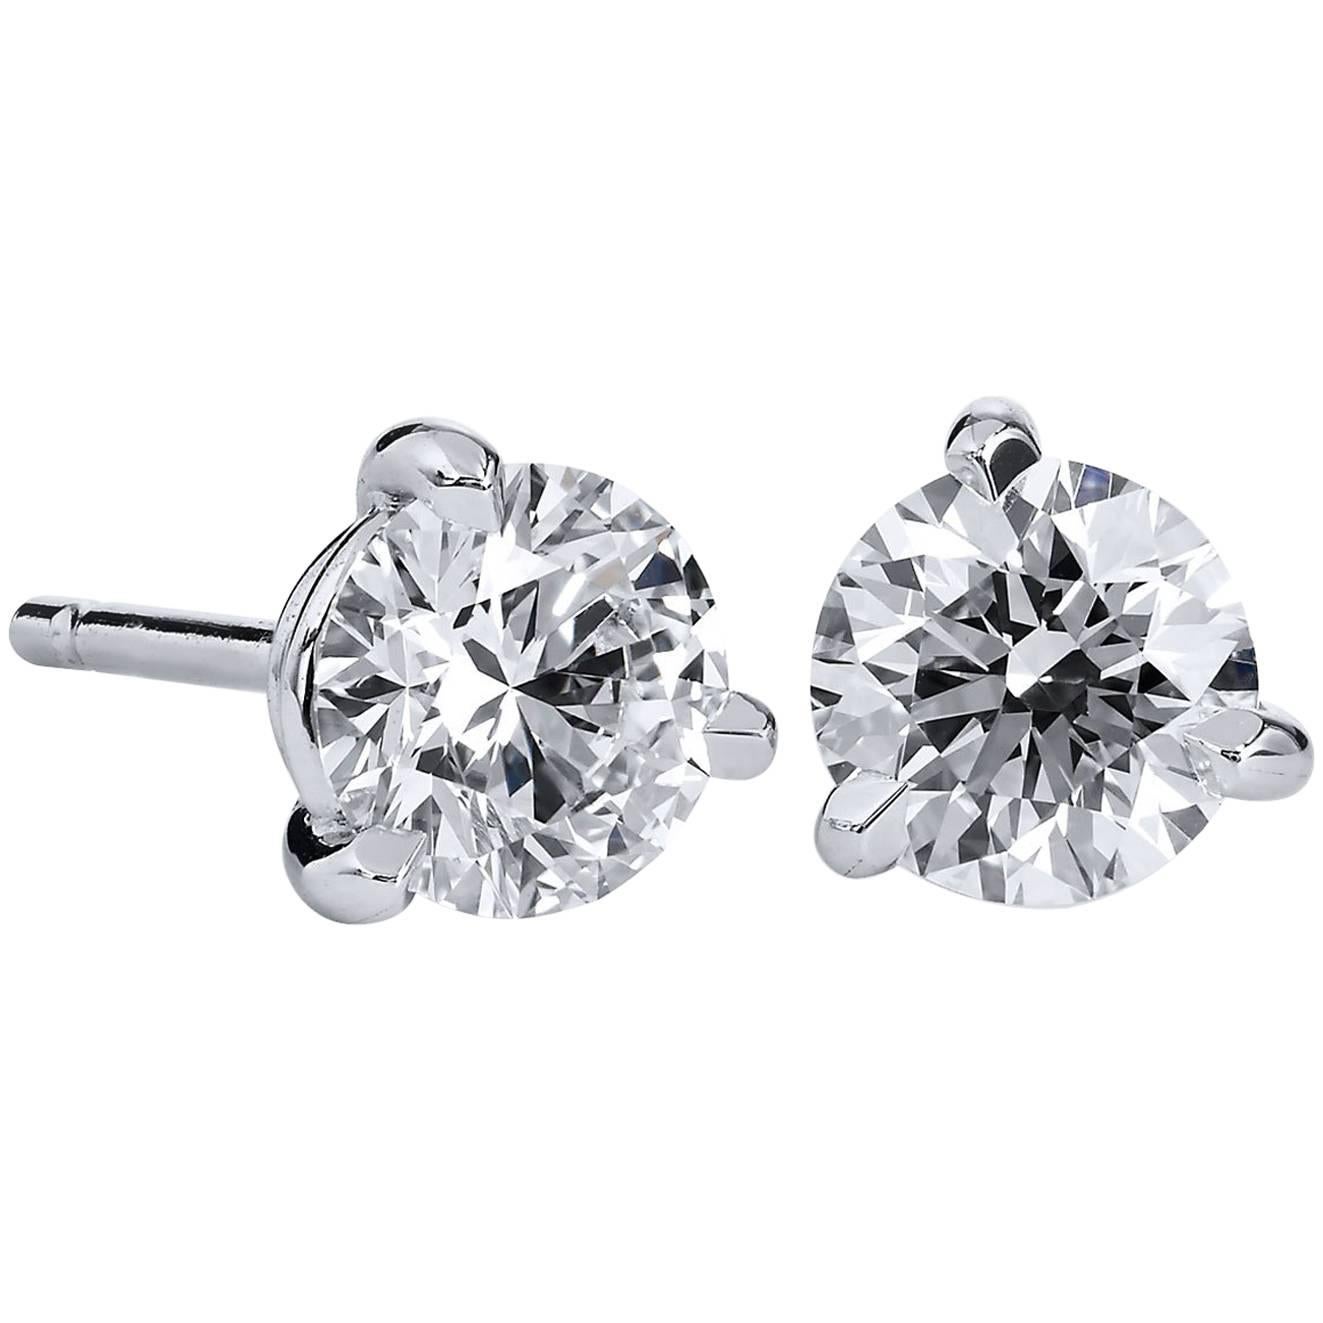 H & H 1.23 Carat Round Cut Diamond Stud Earrings